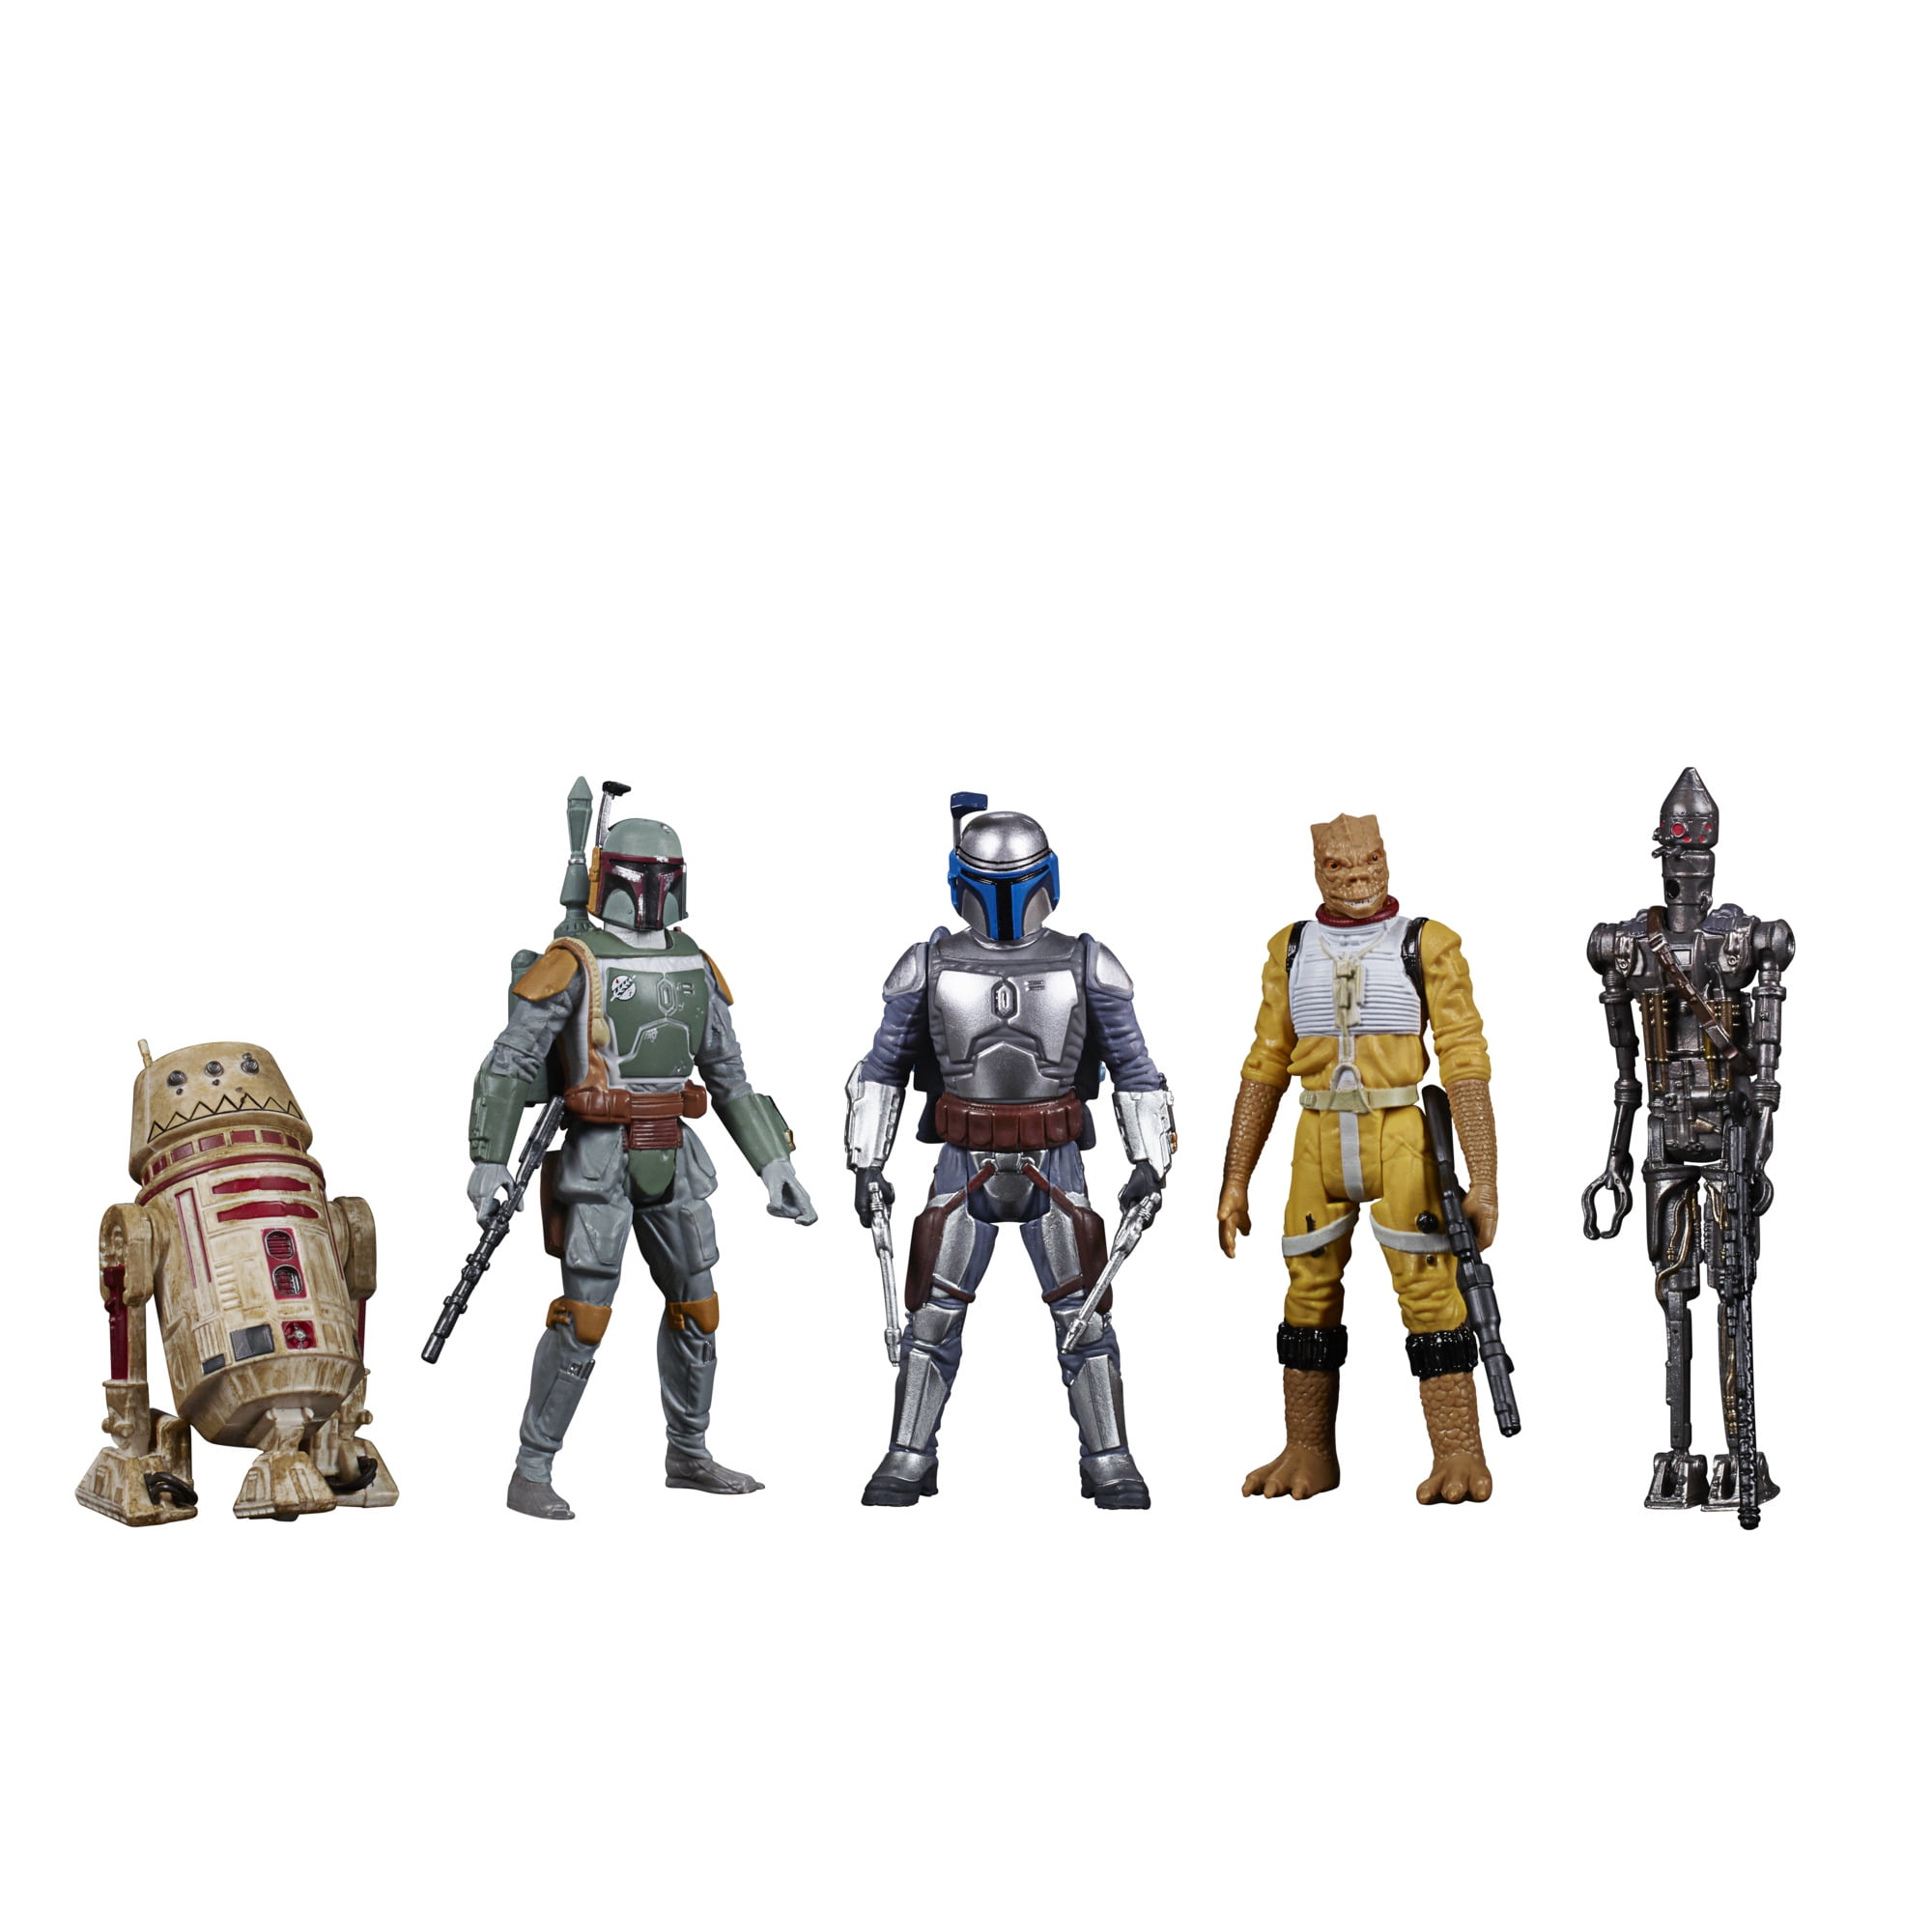 Star Wars Celebrate The Saga Toys Bounty Hunters Action Figure Set 5 Figures for sale online 